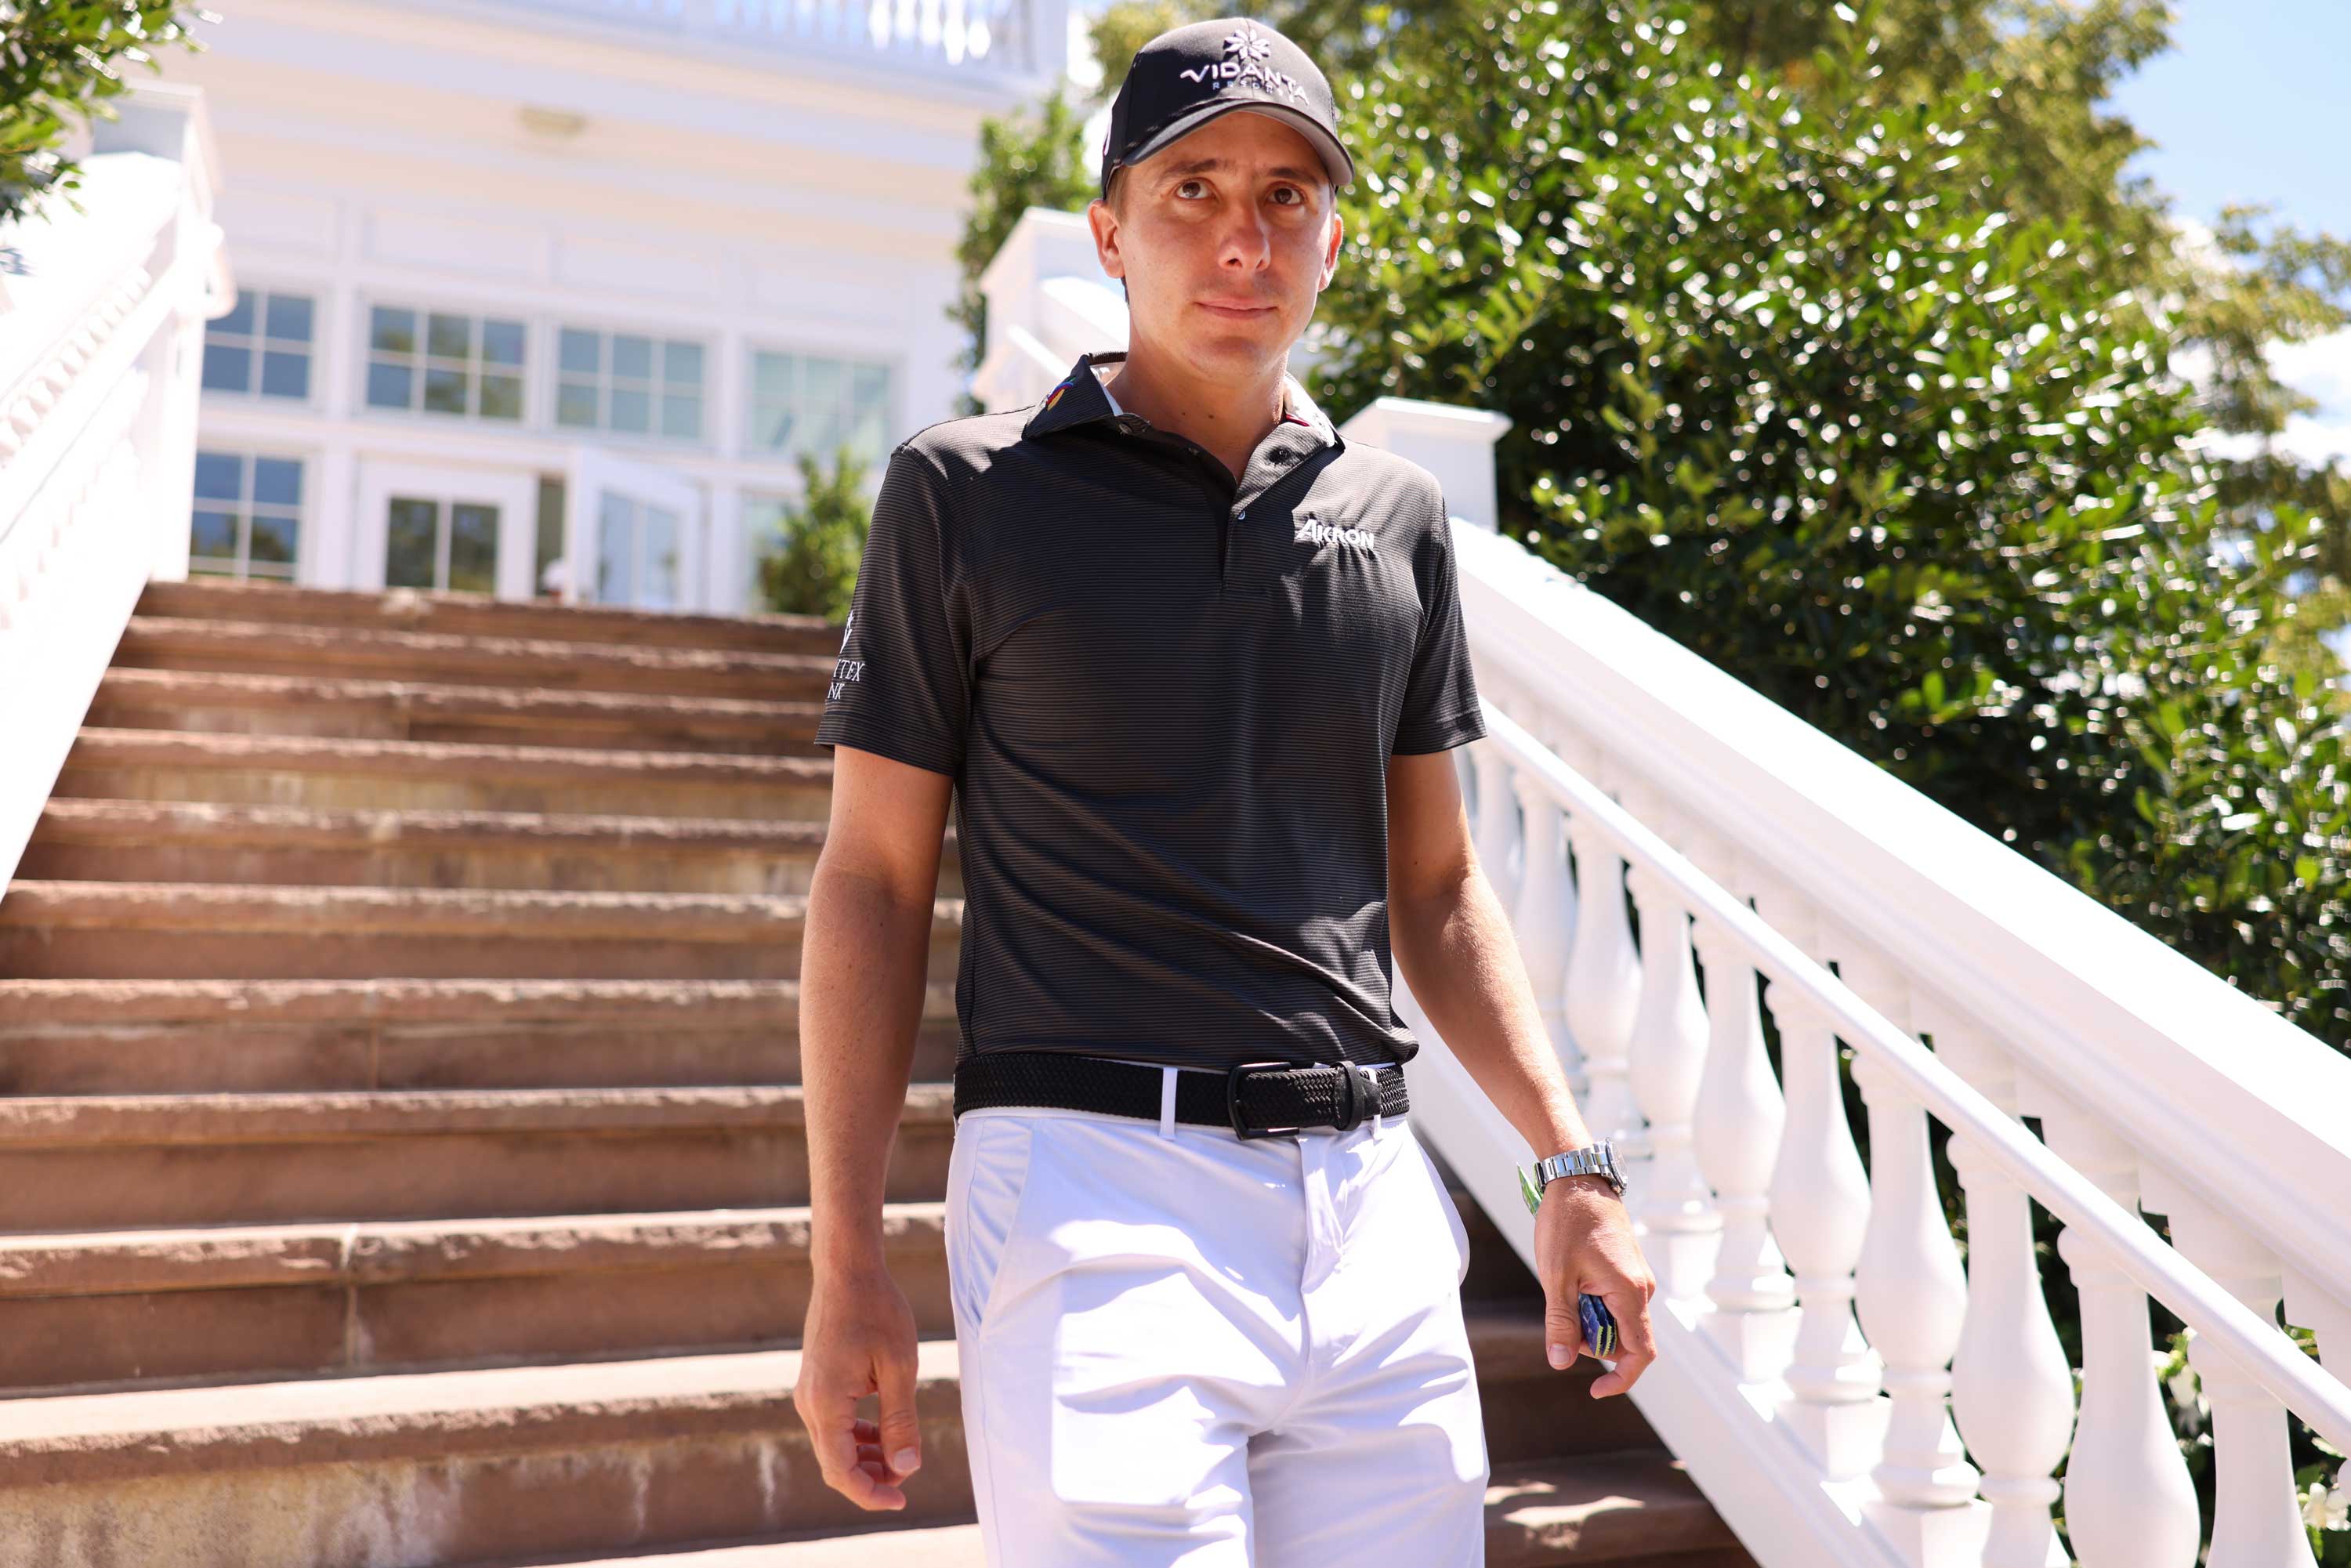 Report: Carlos Ortiz withdraws name from LIV golfers' antitrust